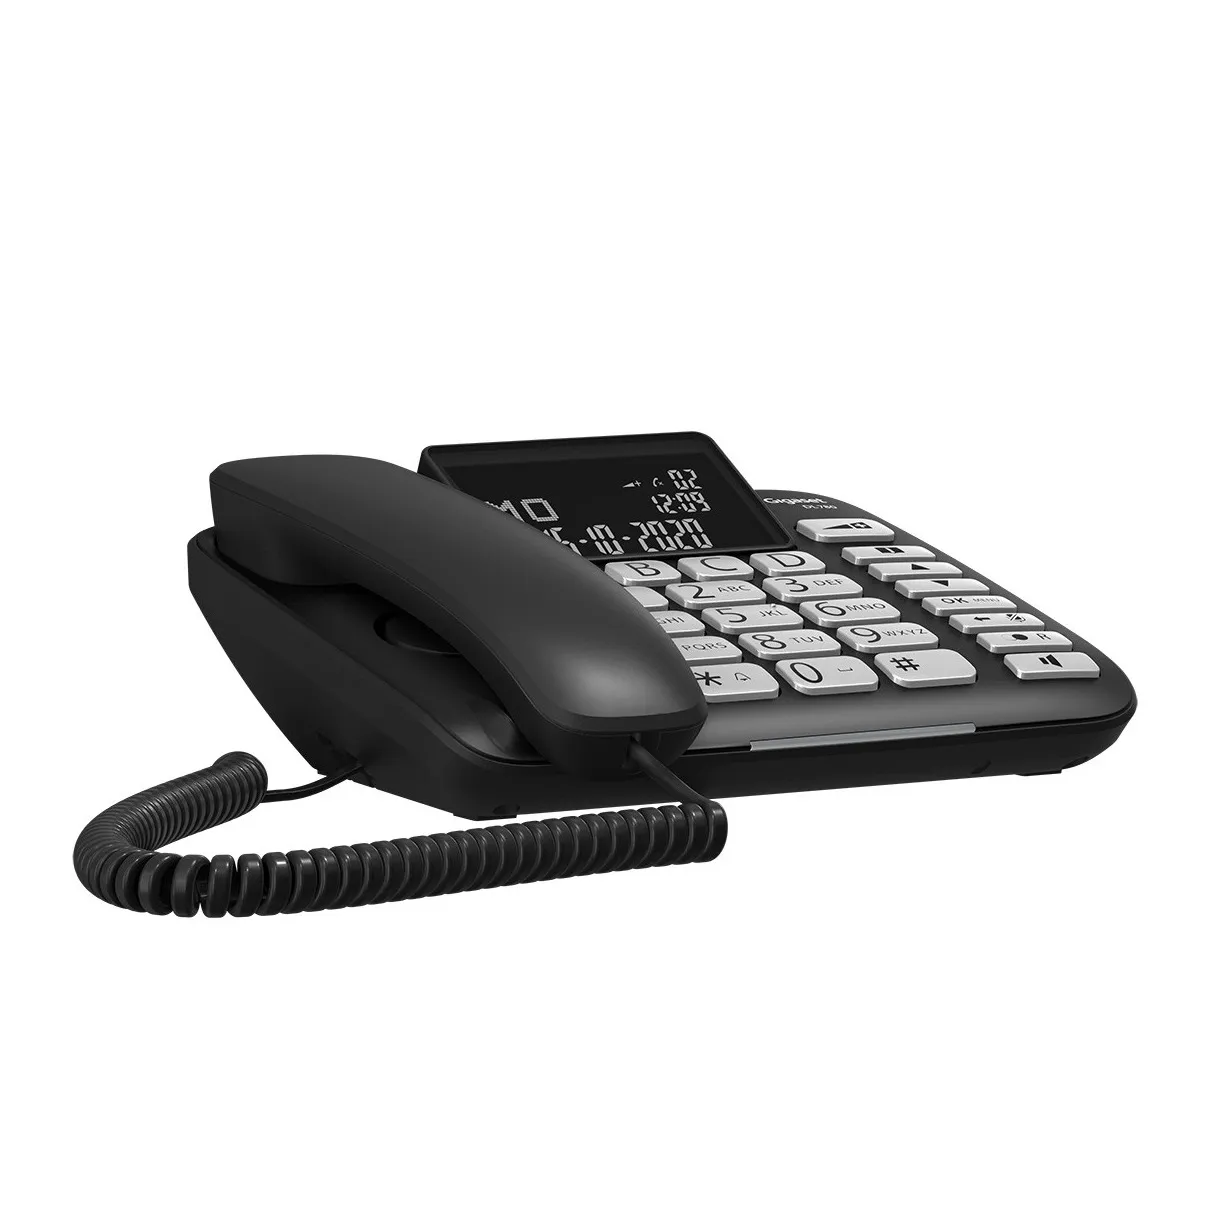 Gigaset DL780 Combi seniorentelefoon Zwart